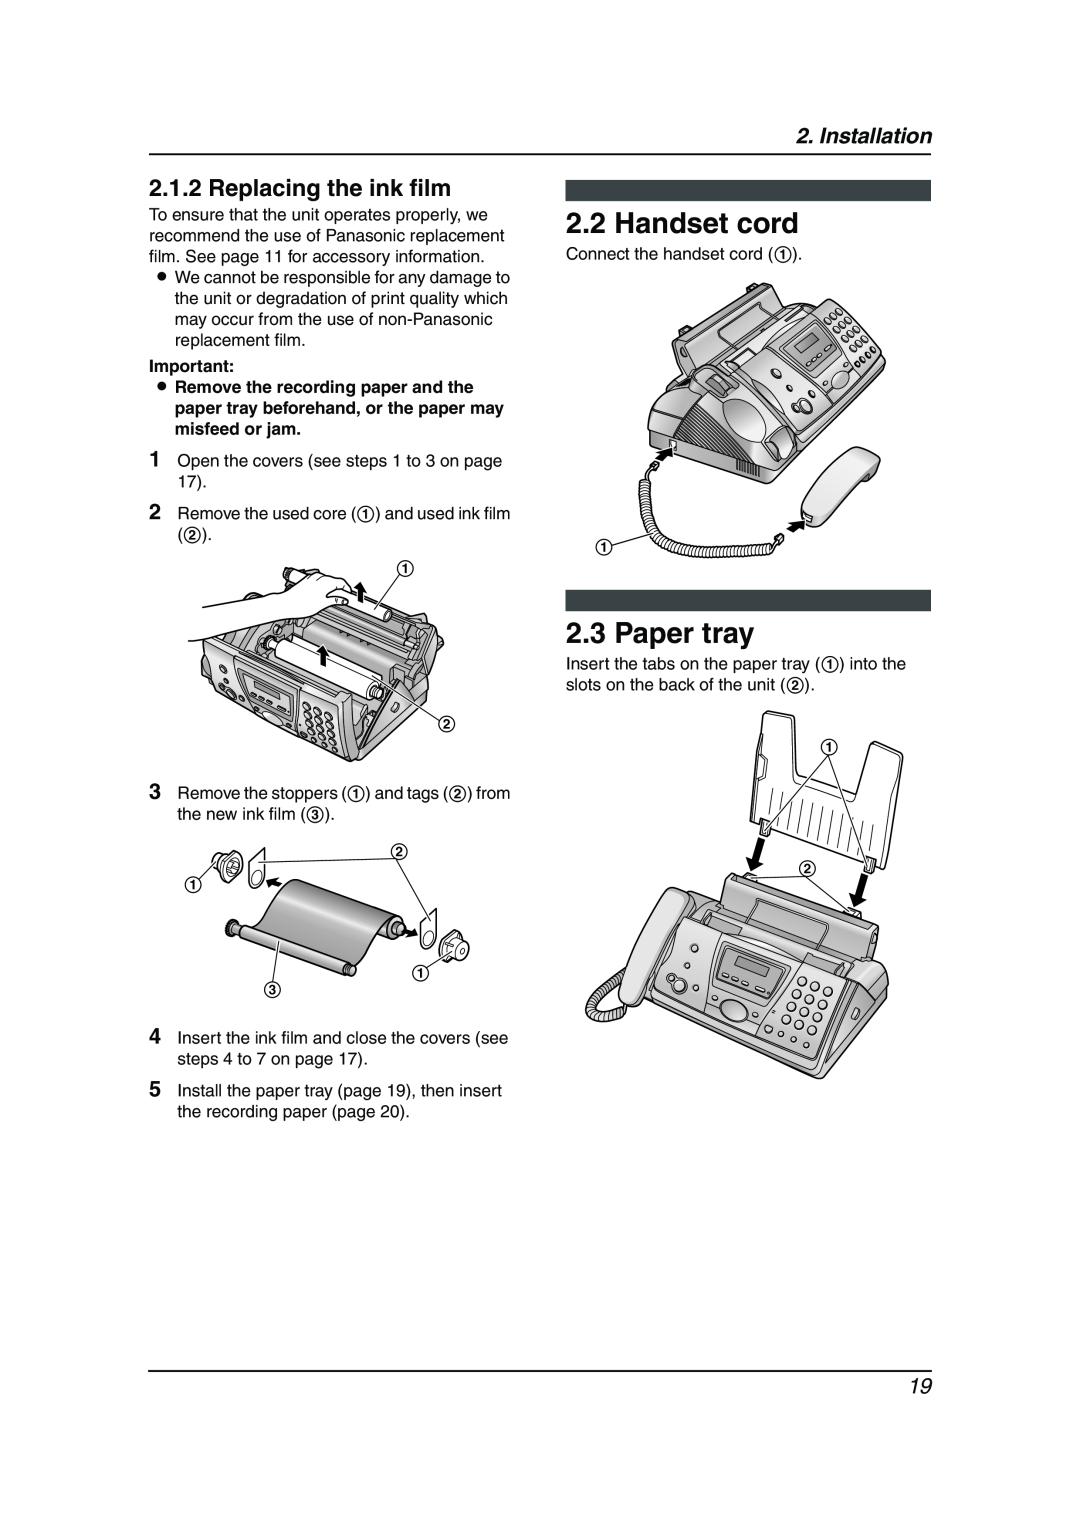 Panasonic KX-FC241AL manual Handset cord, Paper tray, Replacing the ink film, Installation 